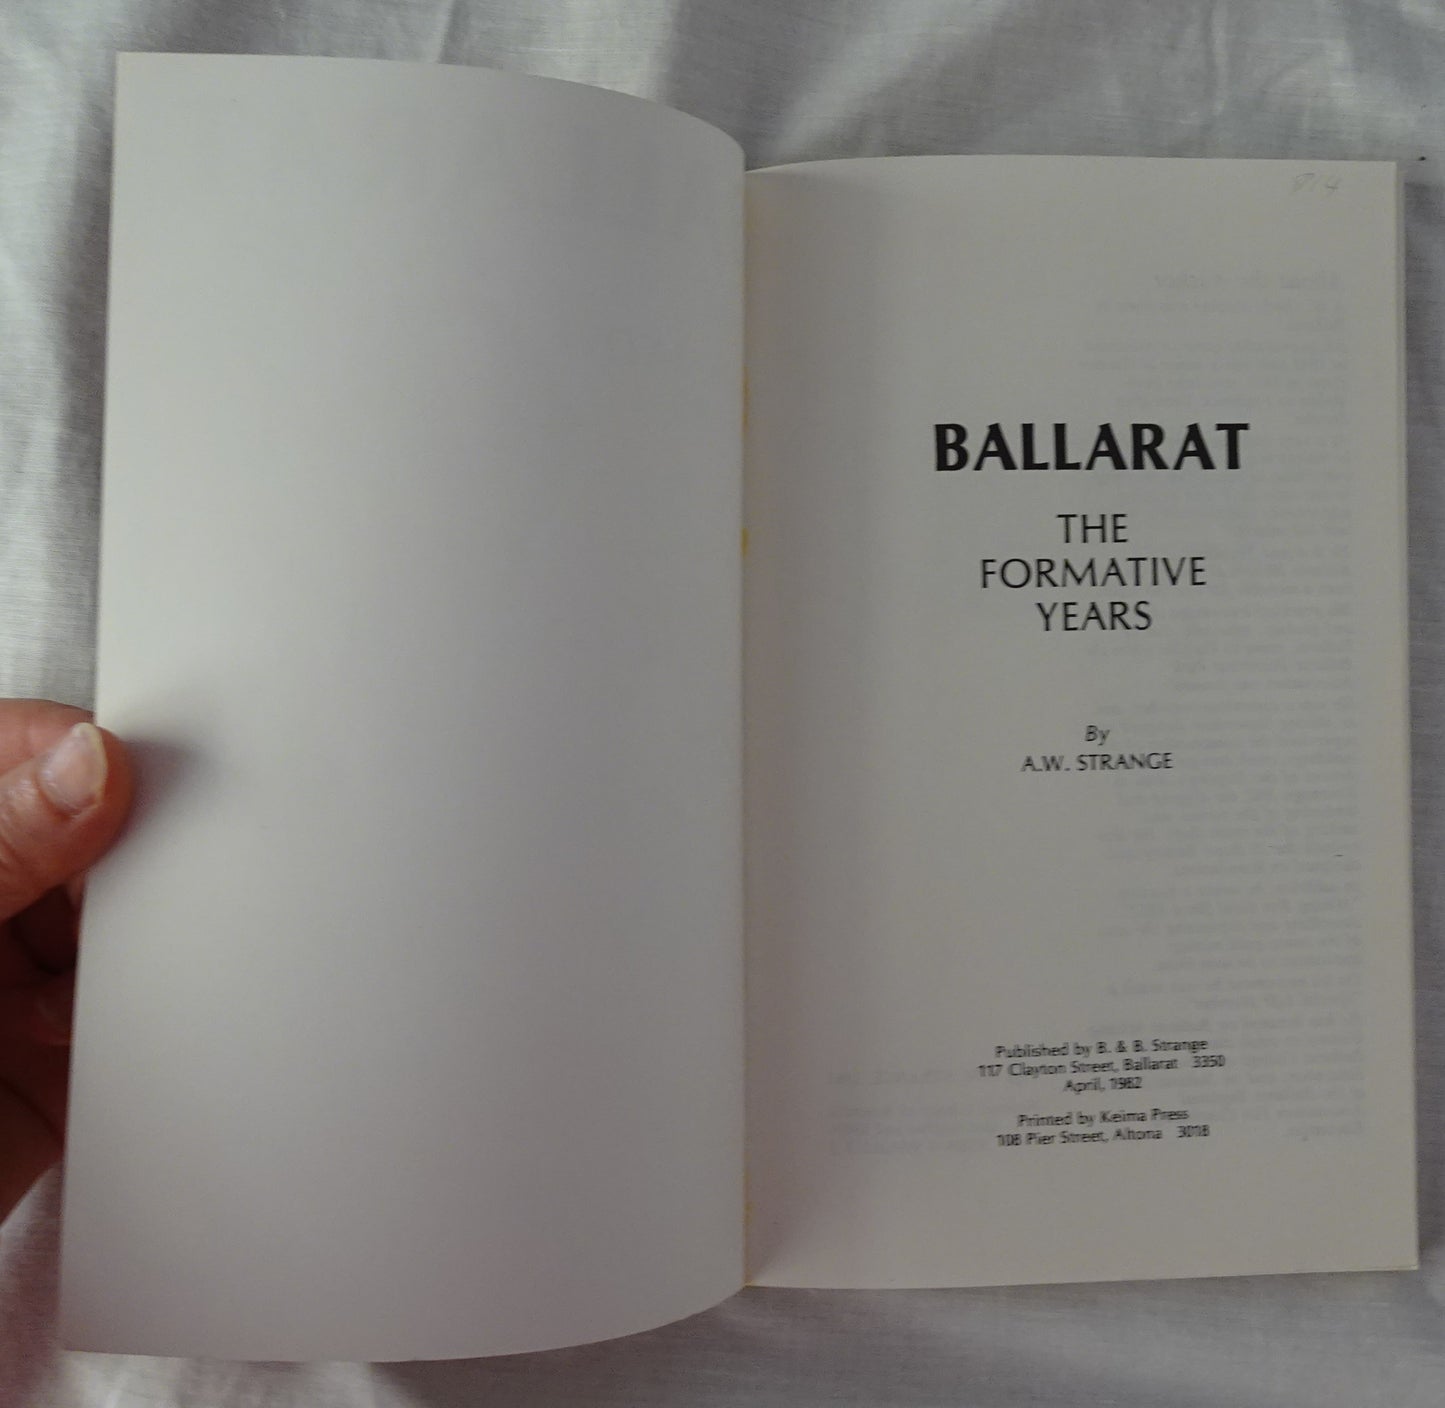 Ballarat by A. W. Strange